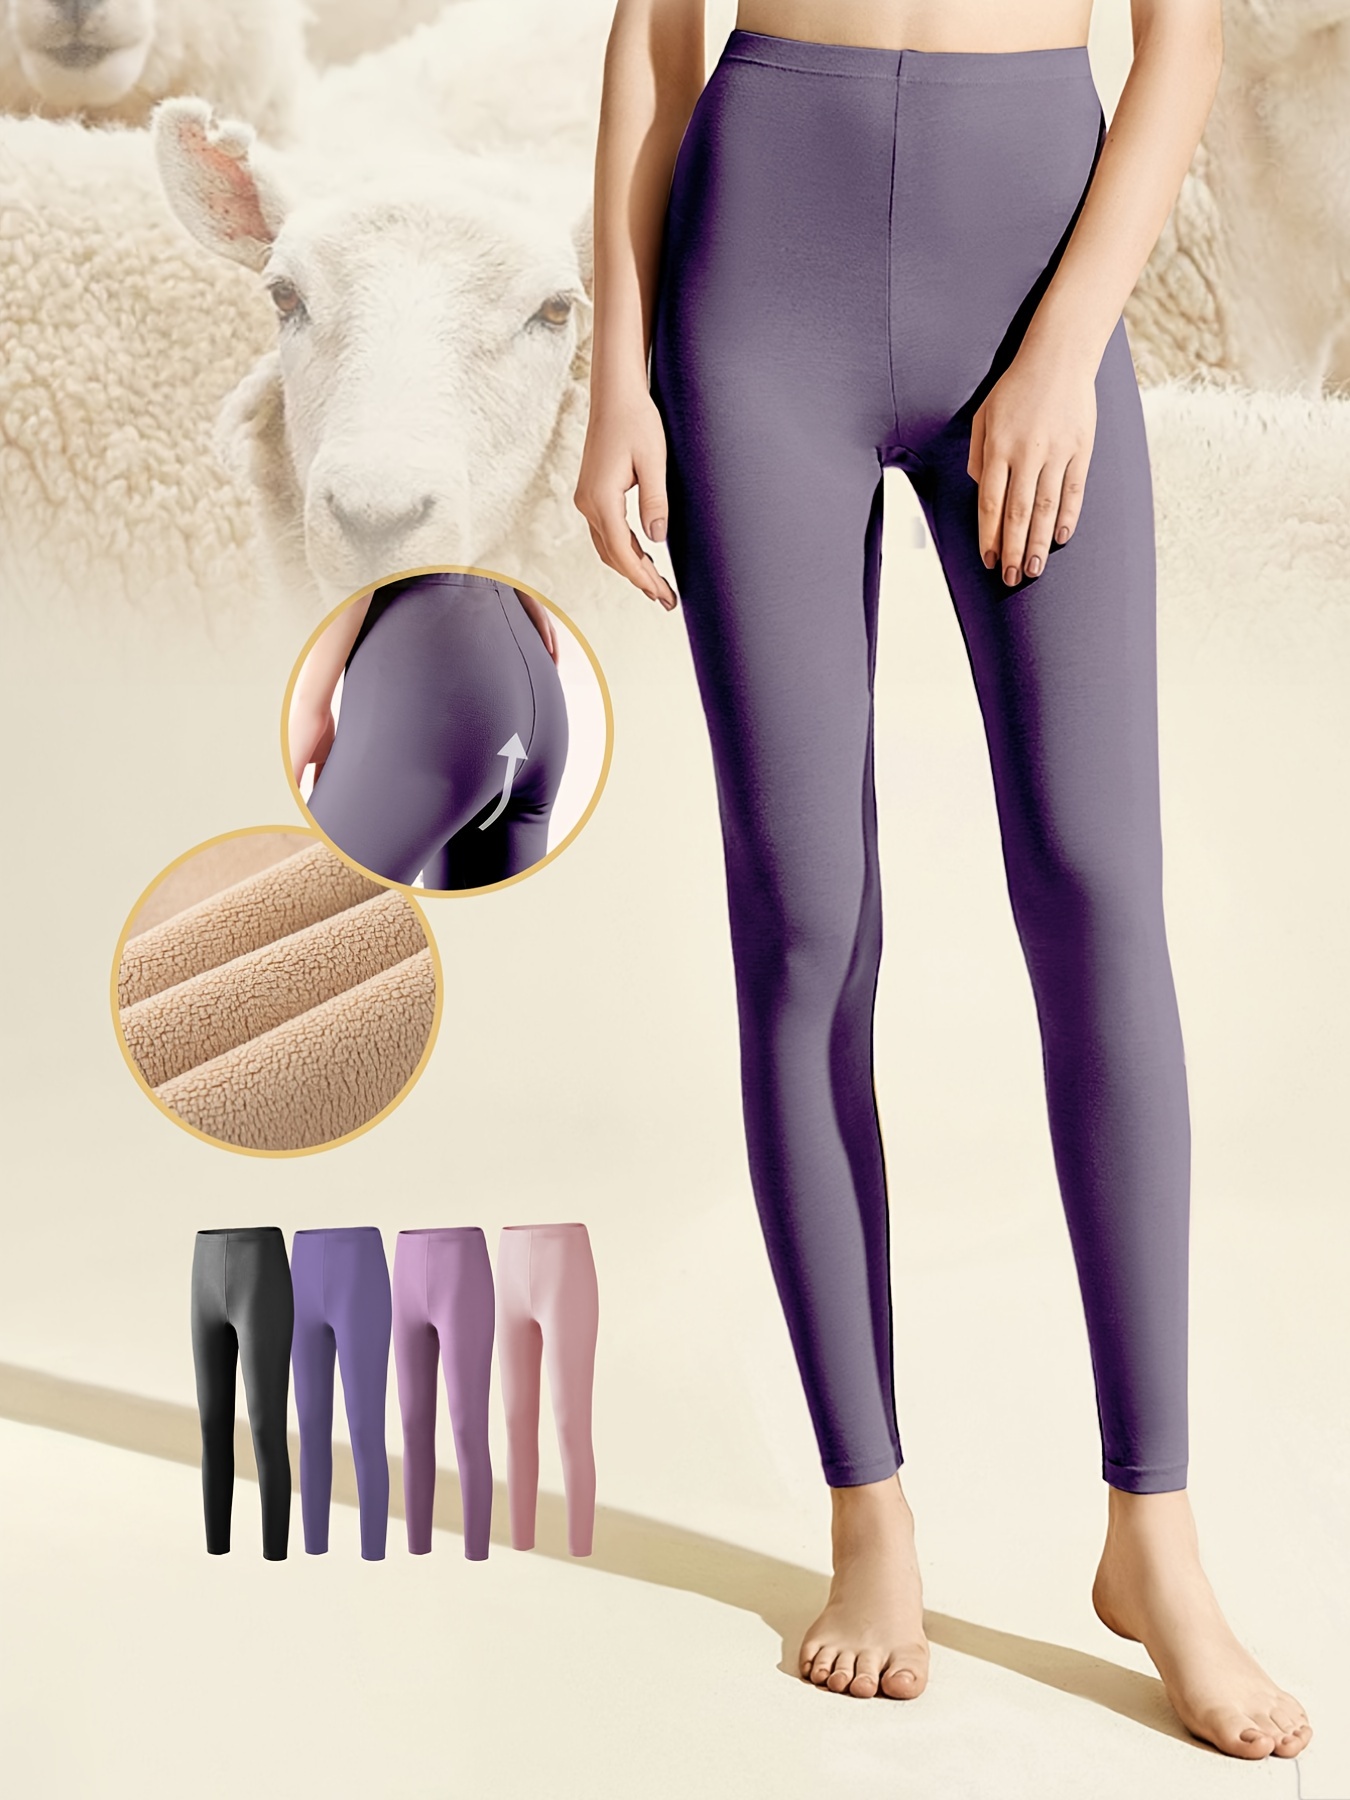 hessnatur Leggings - Trousers - winterpflaume/purple - Zalando.de